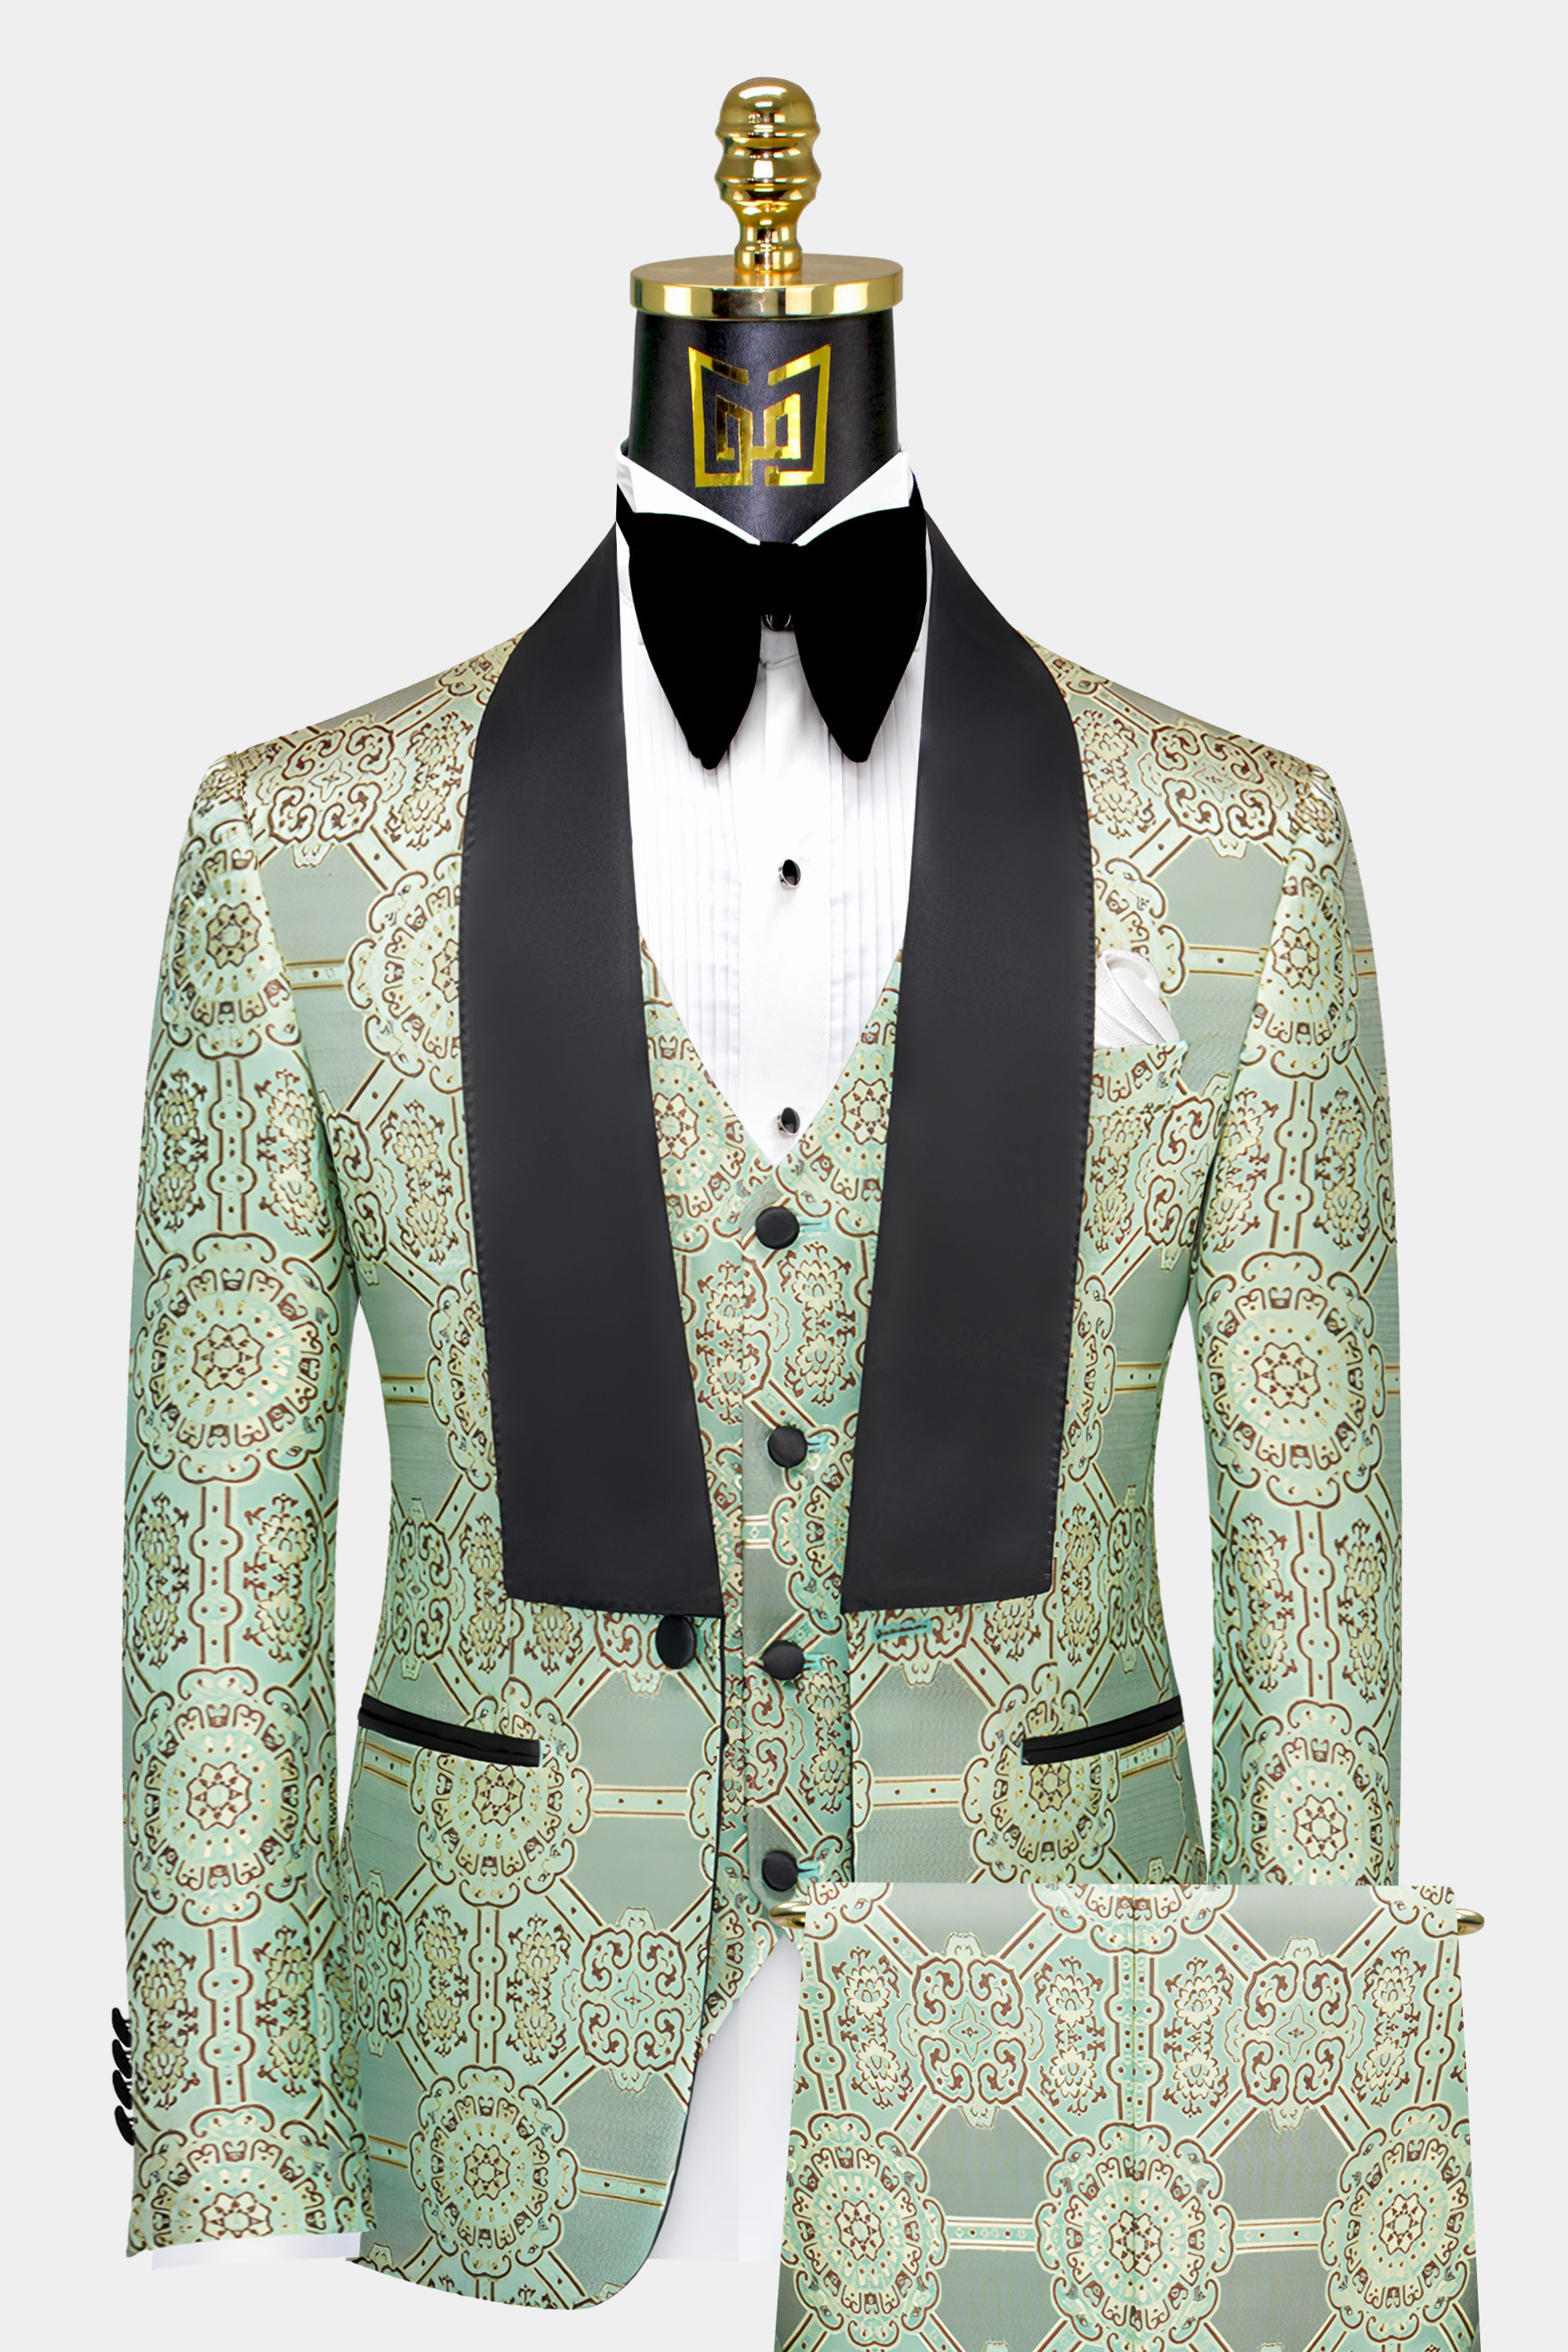 Mint Green Tuxedo Suit - 3 Piece